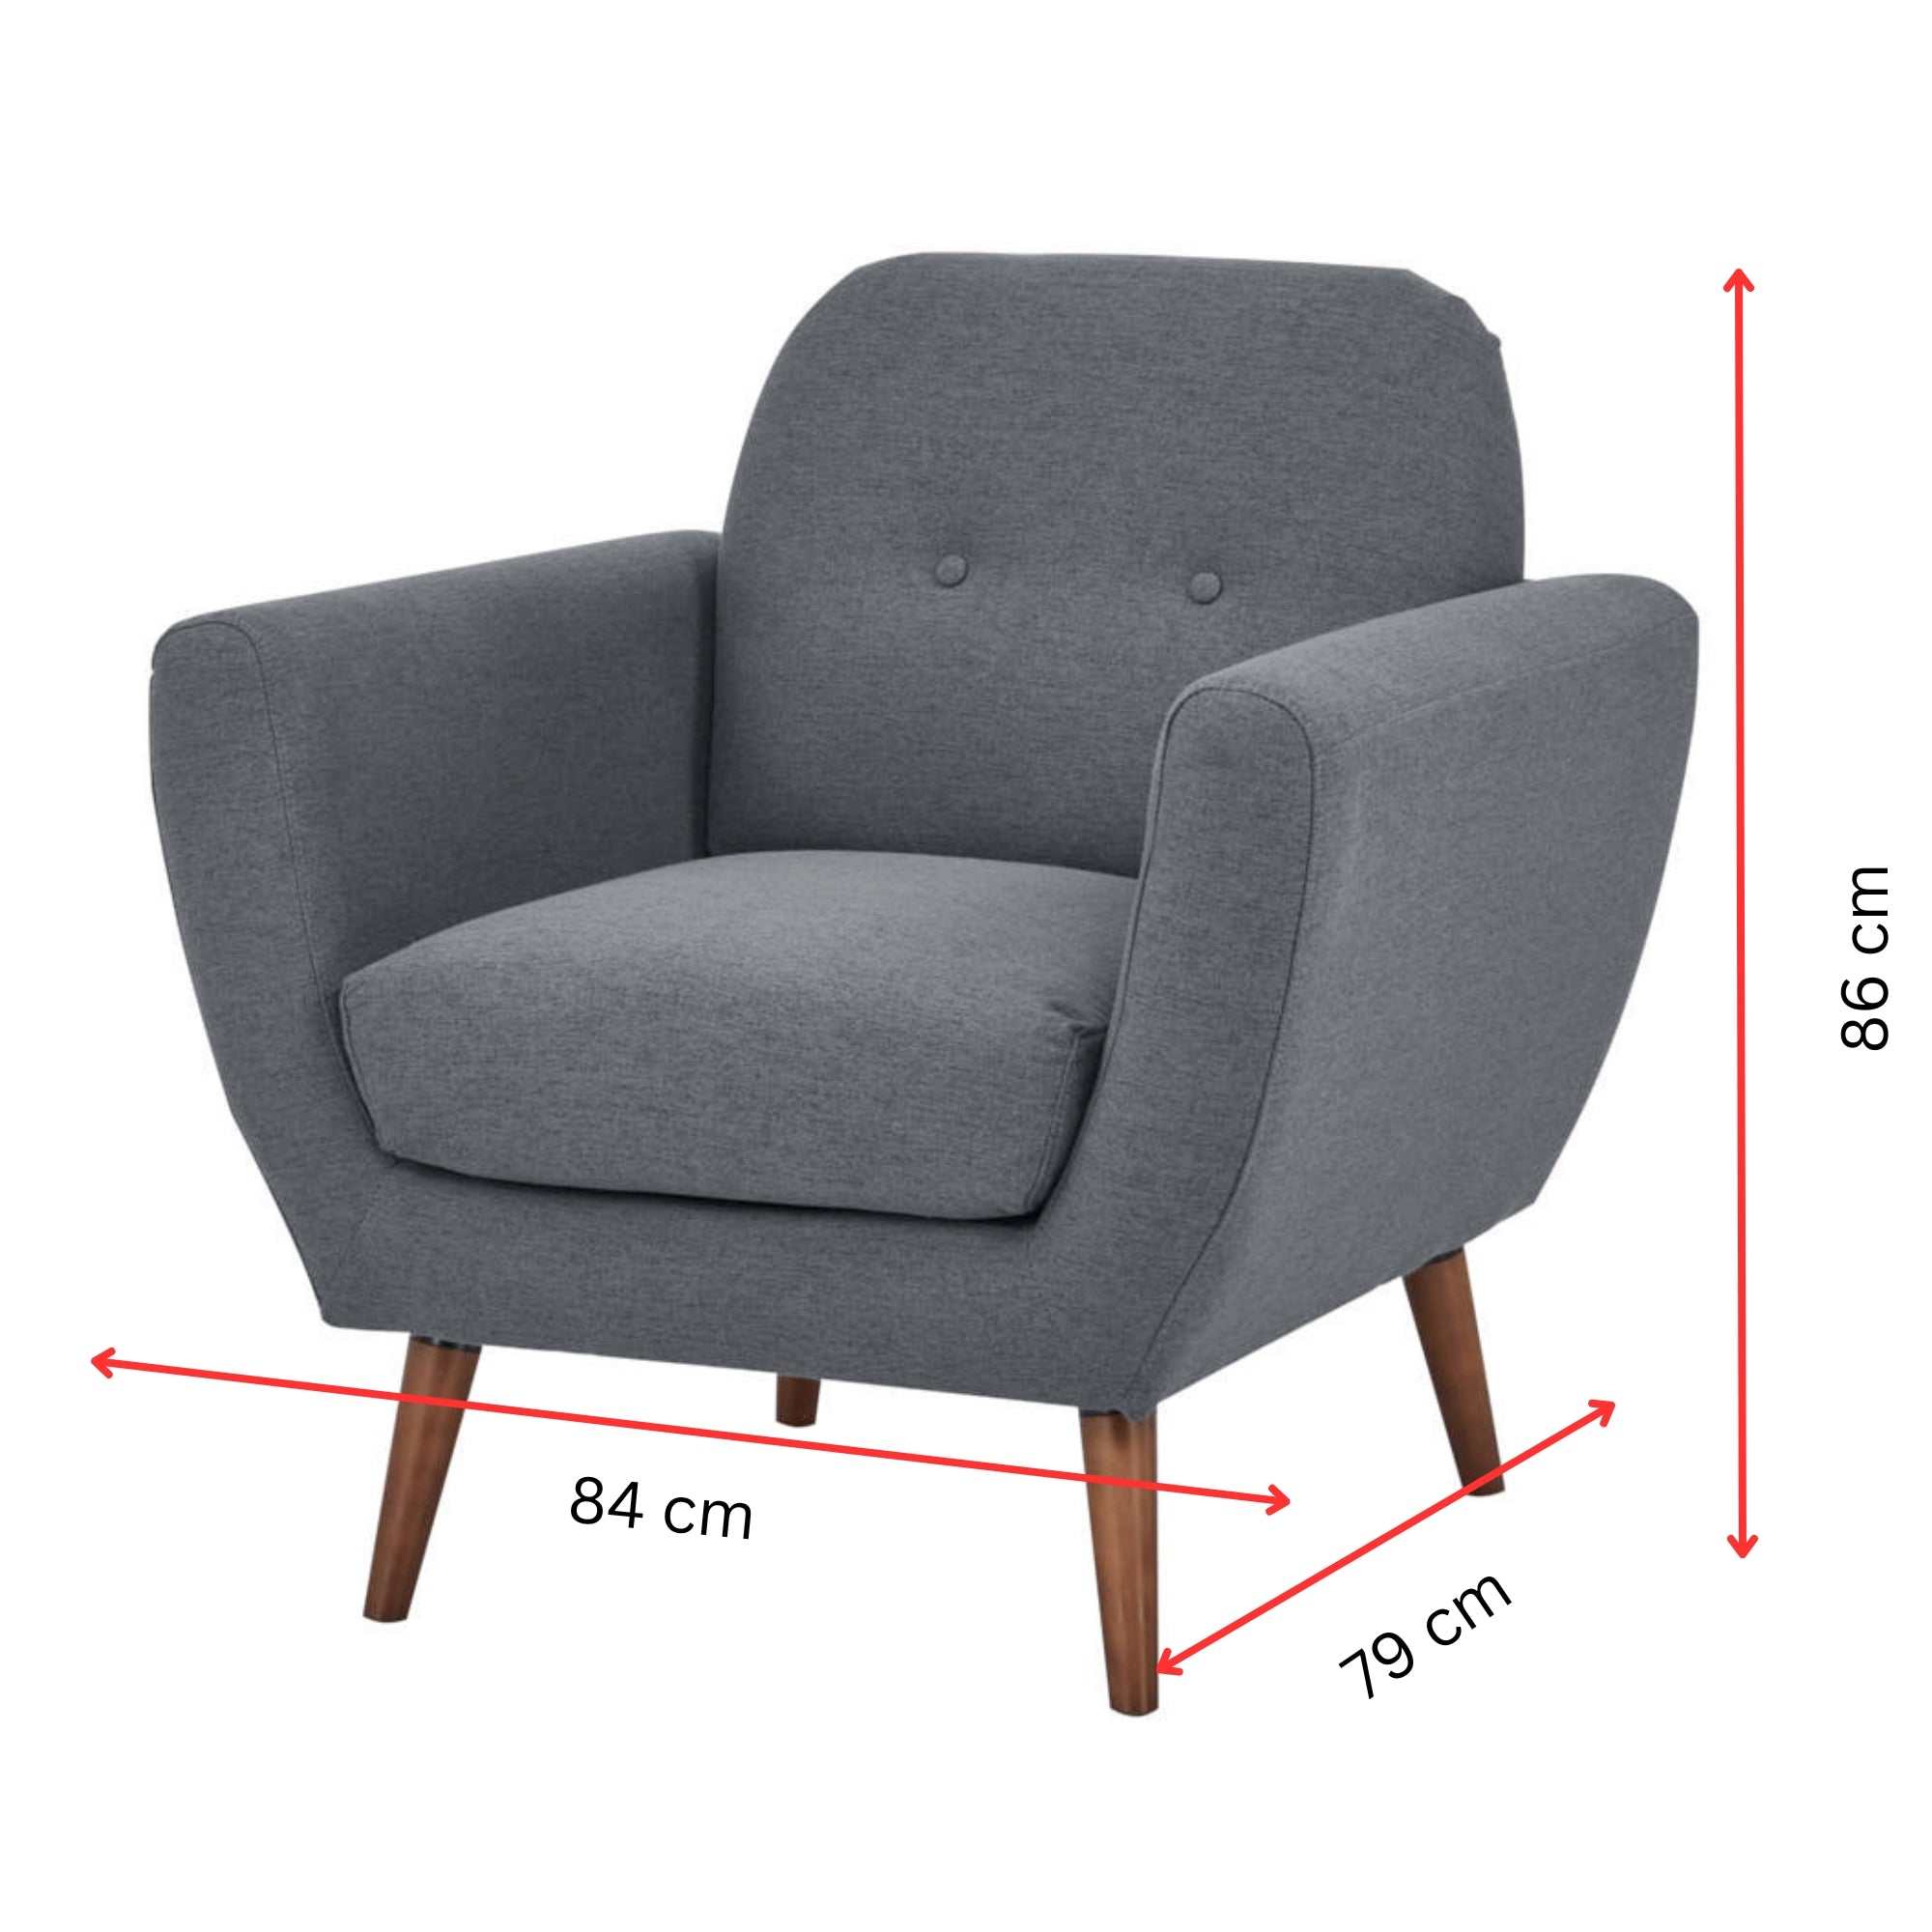 Lilliana 3 + 1 Seater Sofa Fabric Uplholstered Lounge Couch - Dark Grey